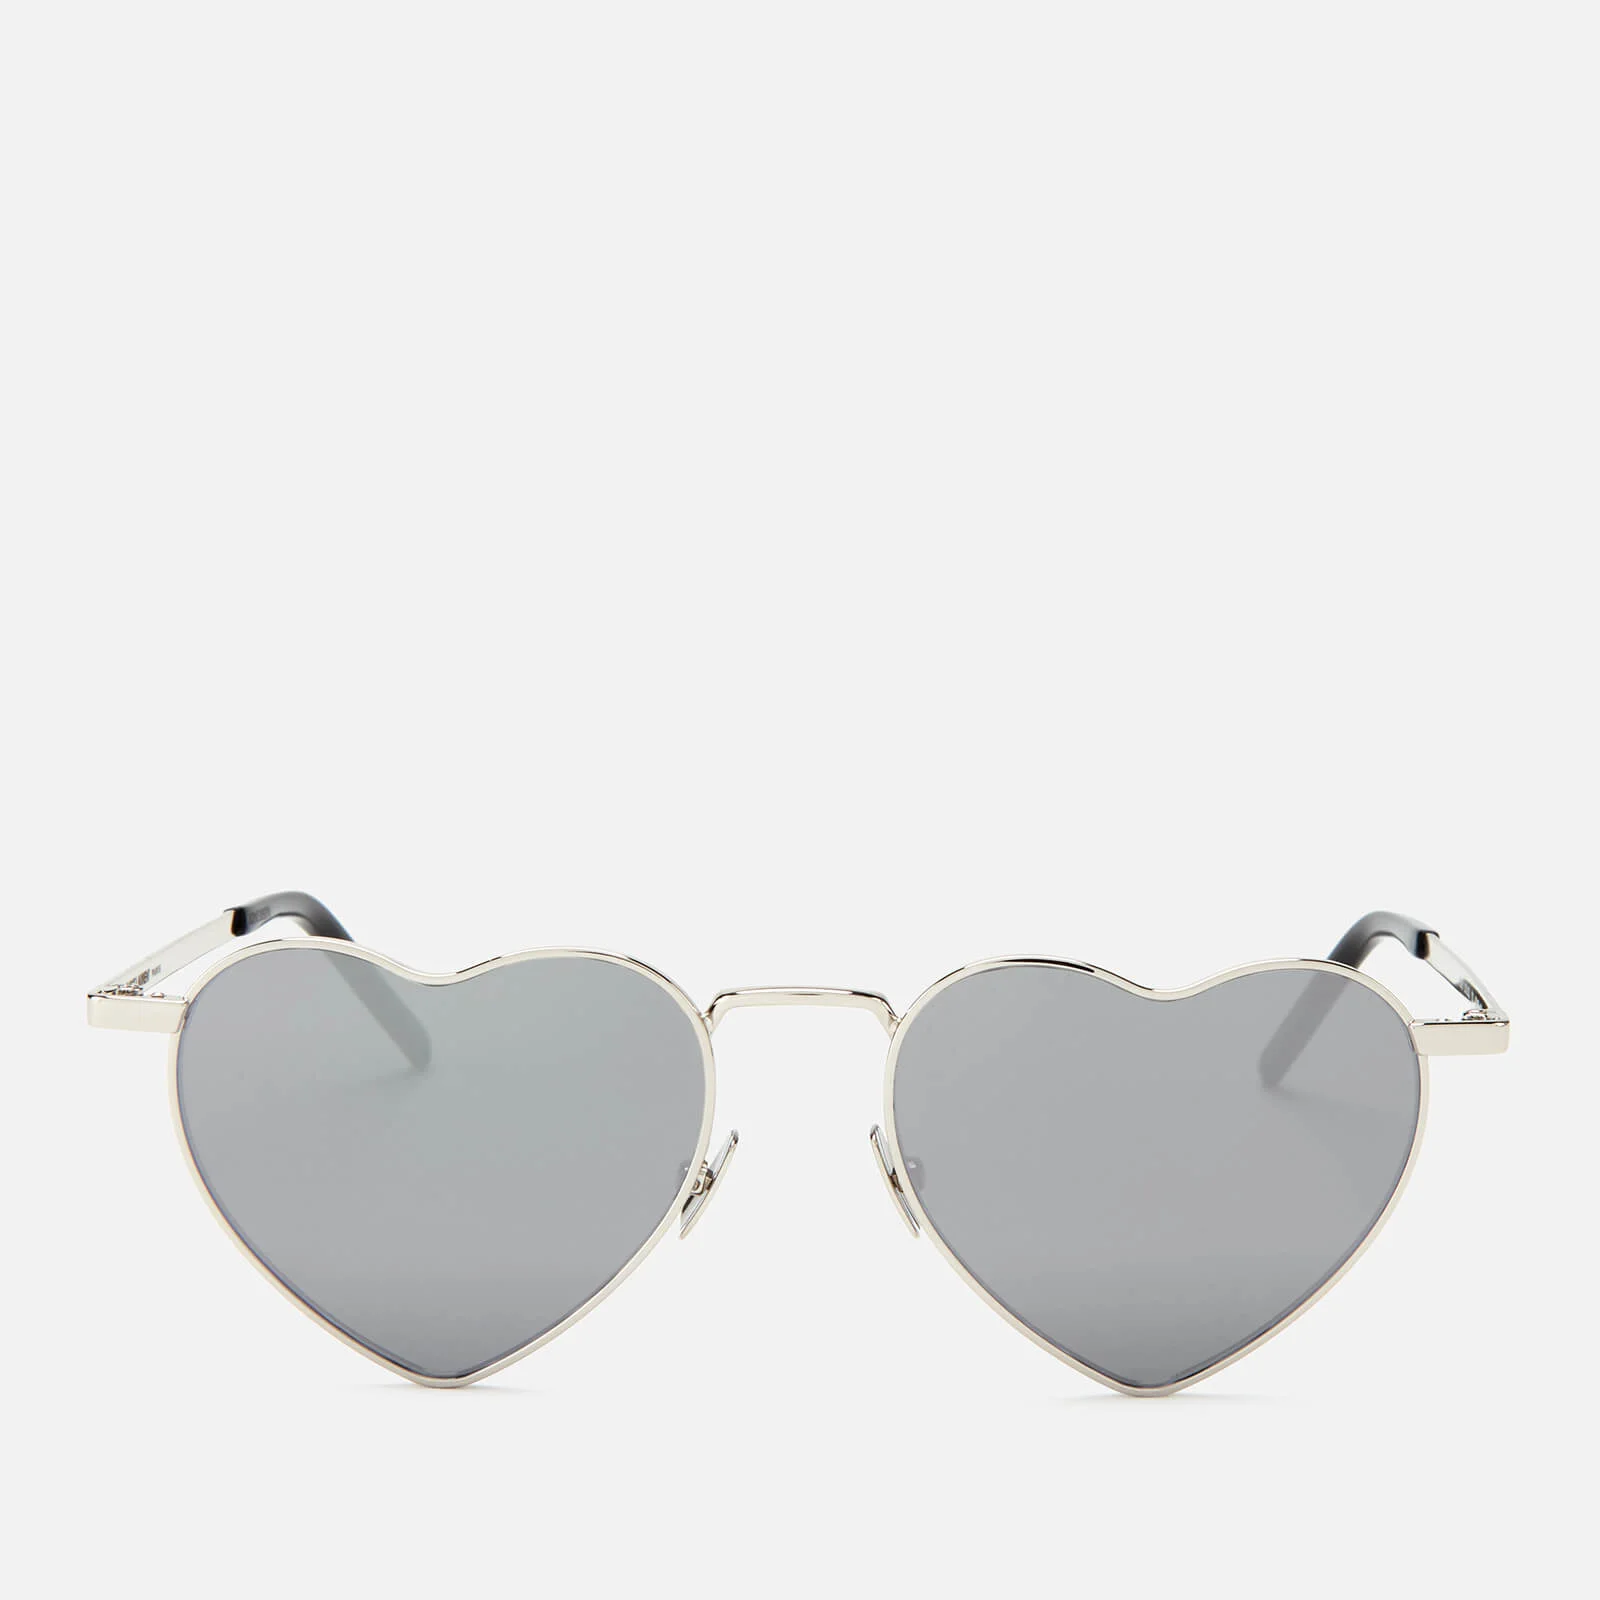 Saint Laurent Women's Loulou Heart Shaped Metal Frame Sunglasses - Silver Image 1